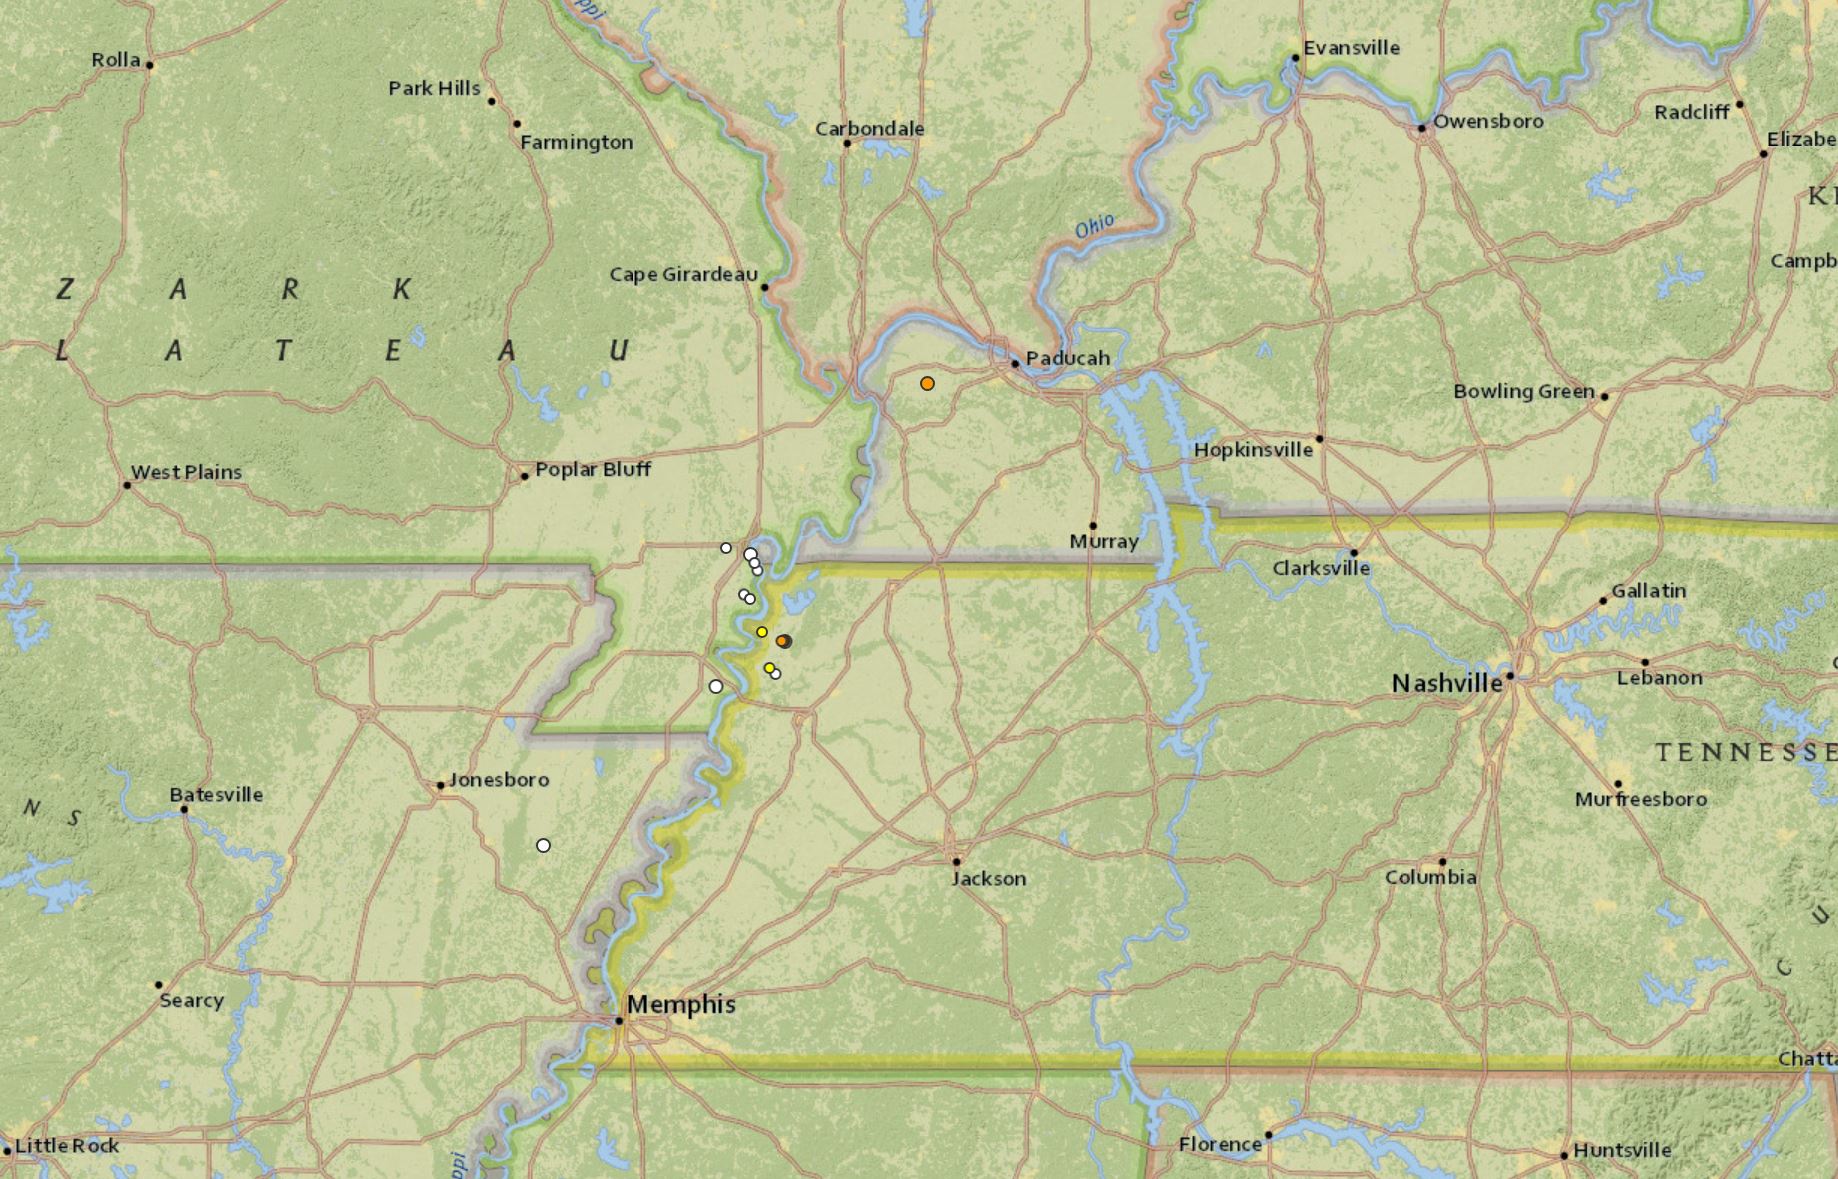 Western Kentucky hit by small earthquake | whas11.com